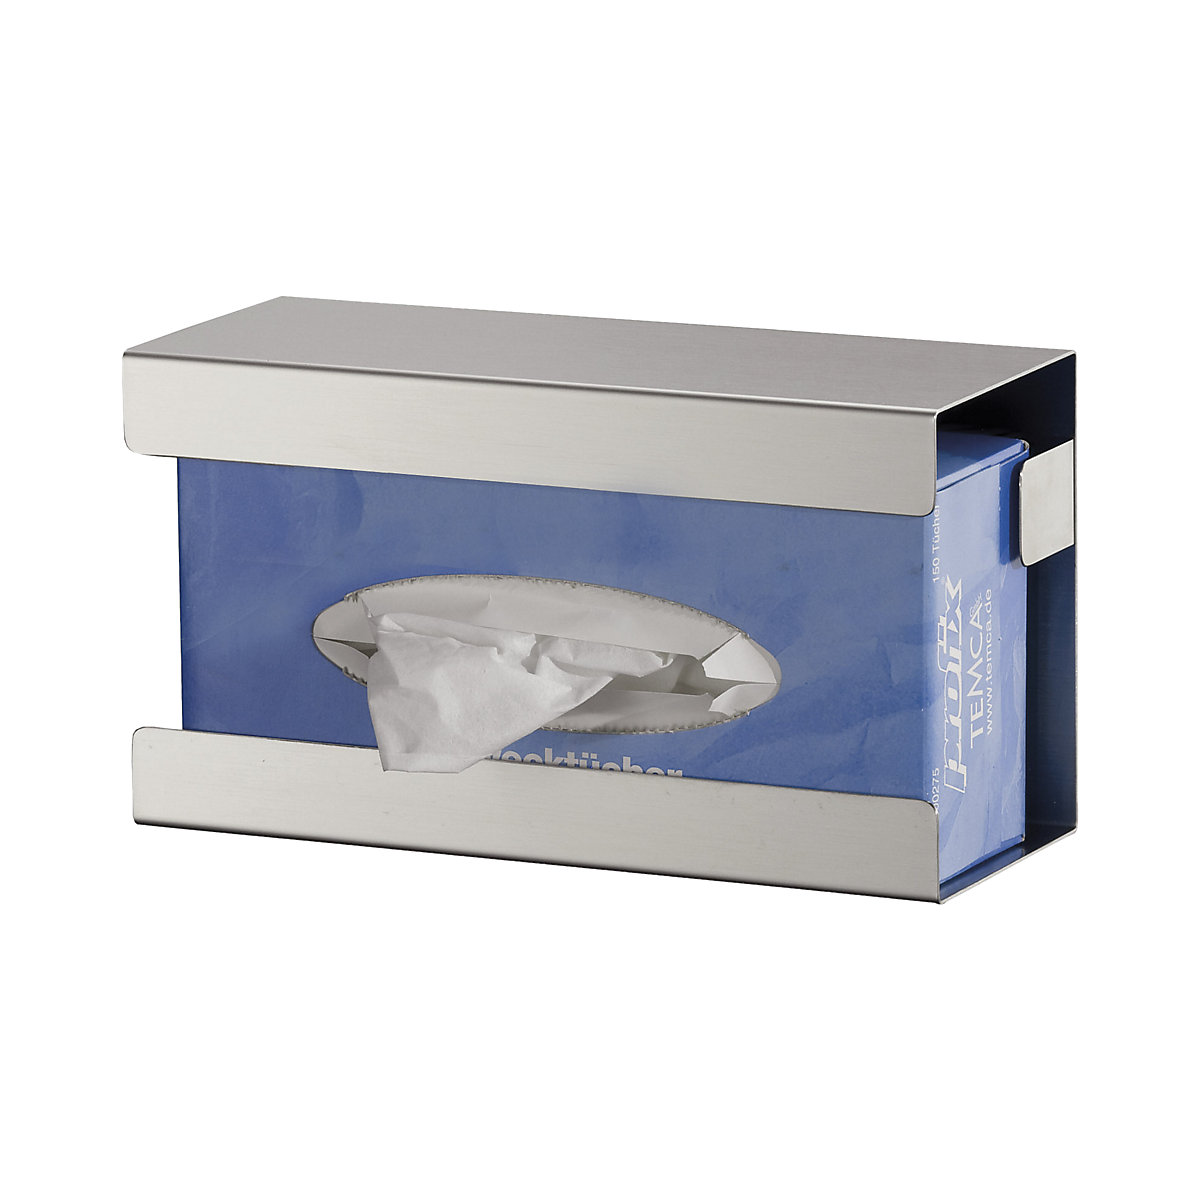 Glove and facial tissue dispenser – AIR-WOLF: for 1 box, HxWxD 138